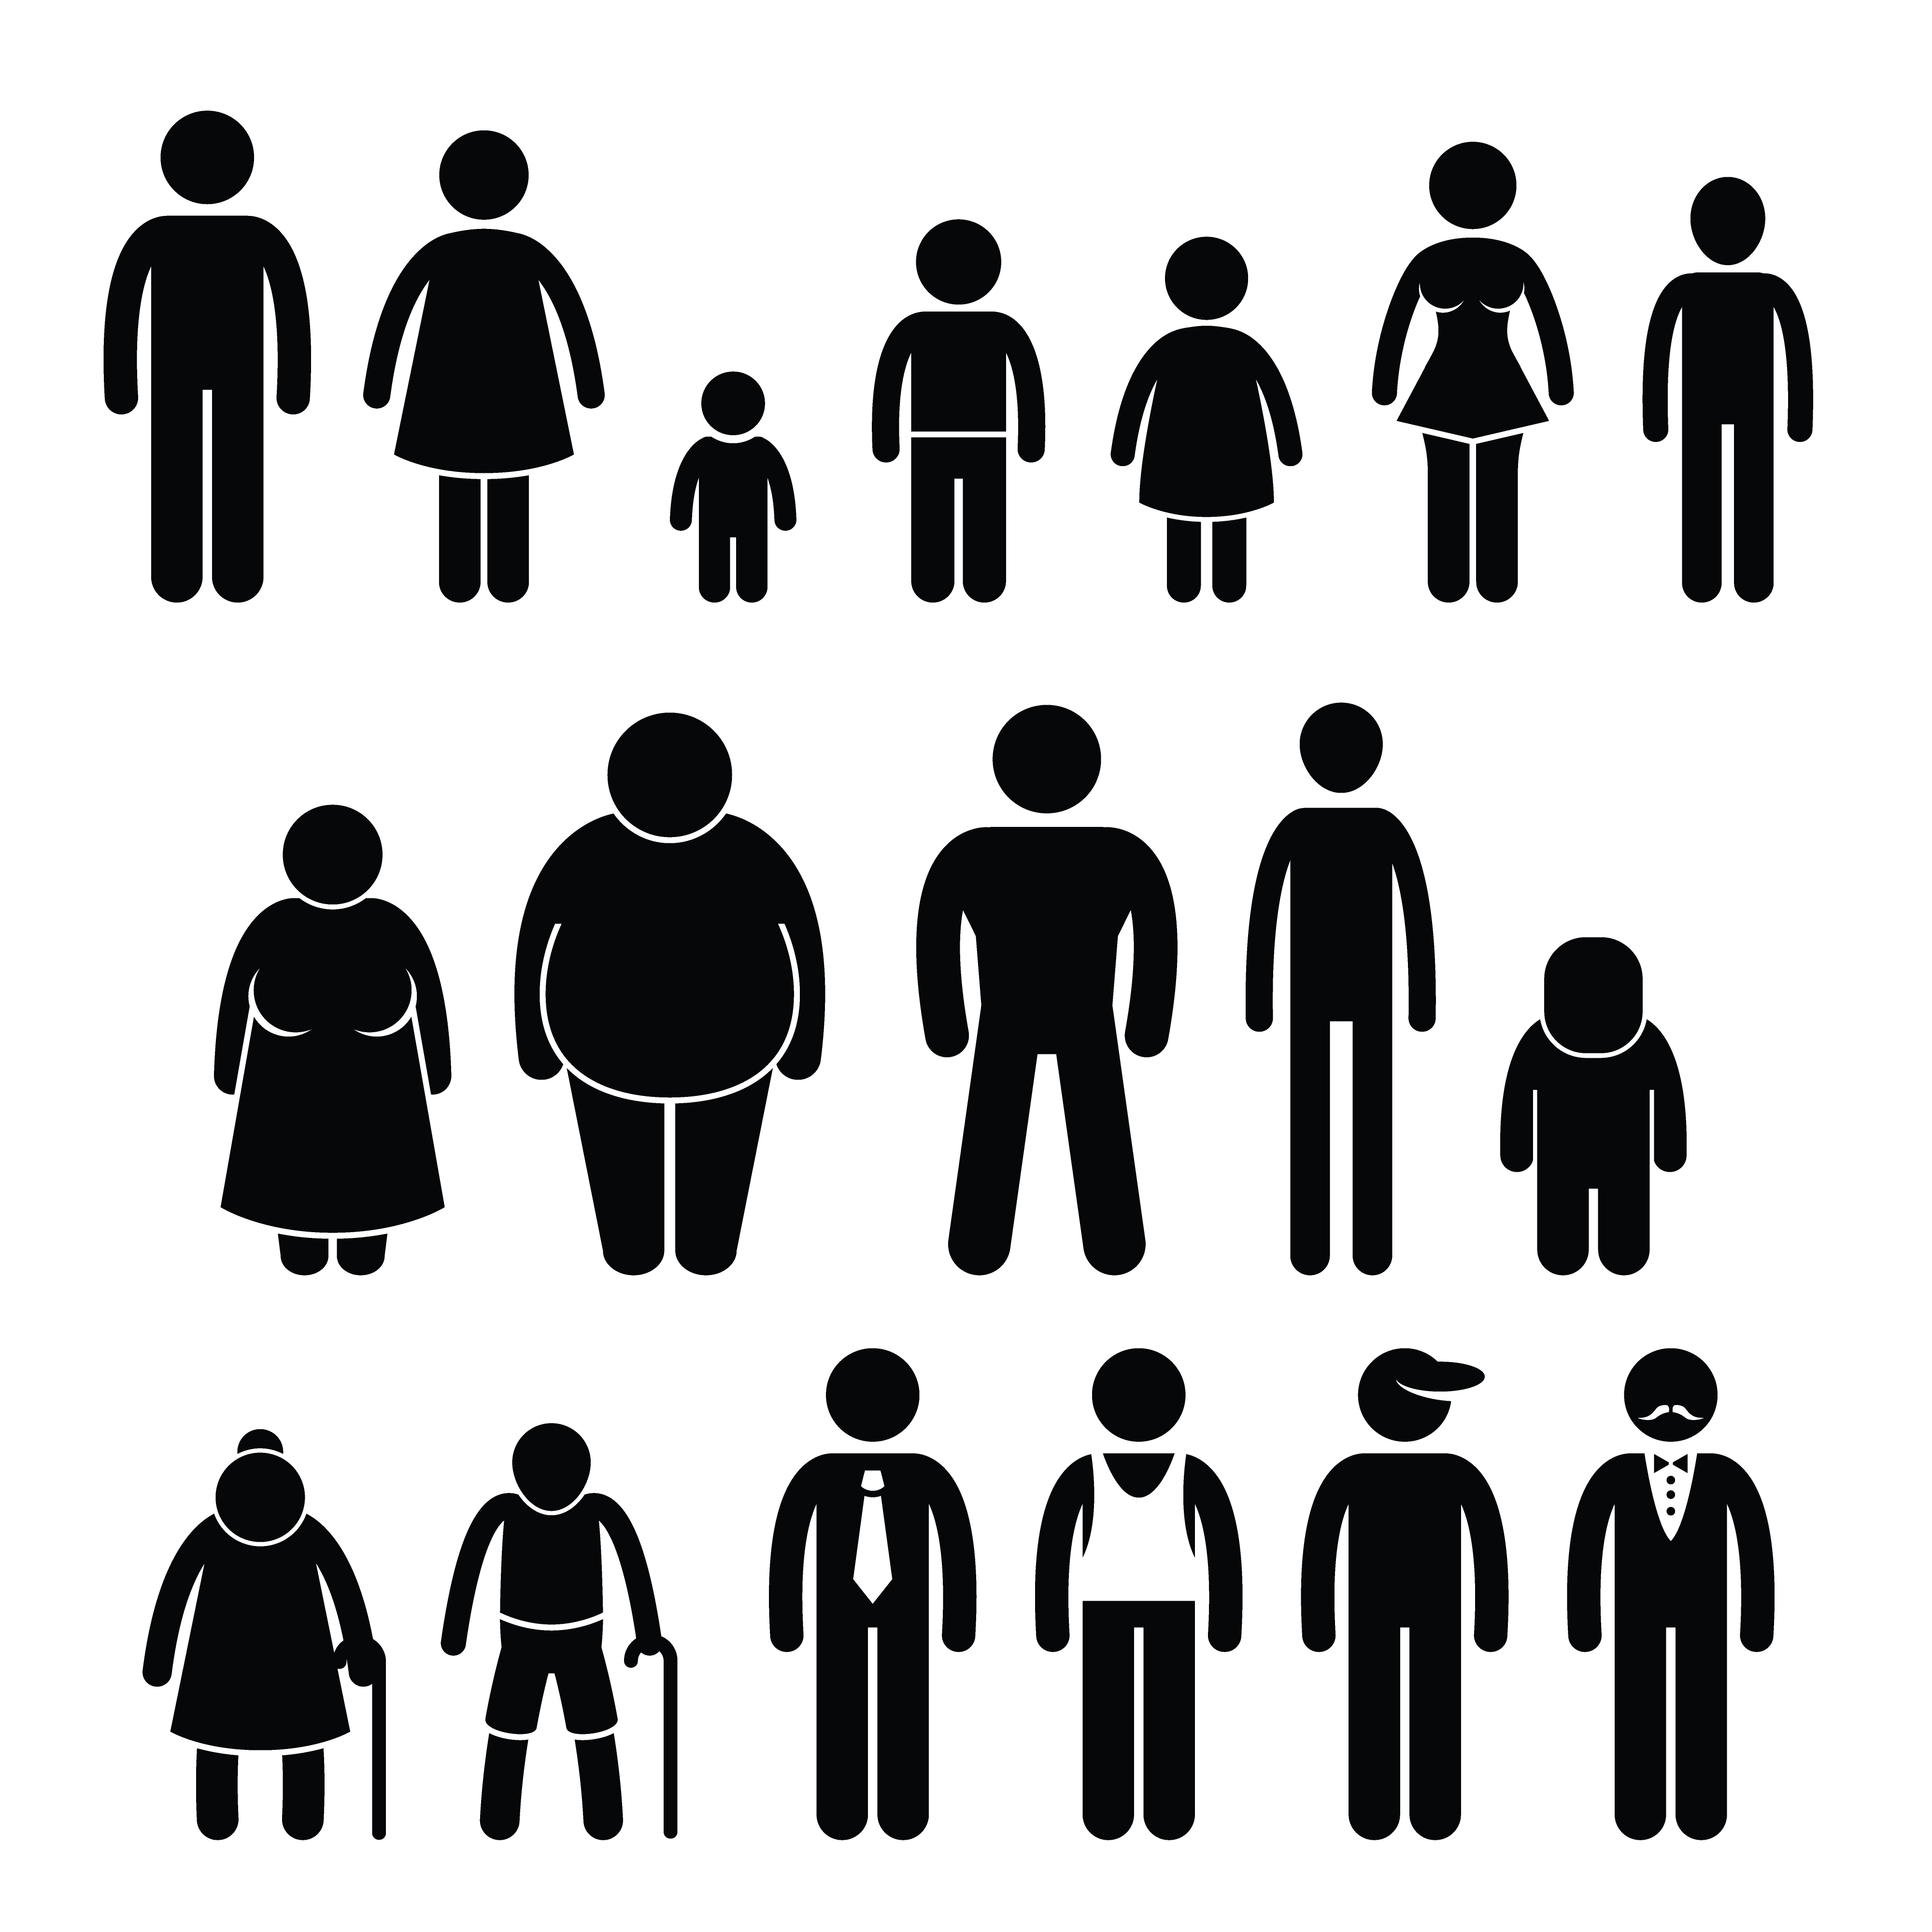 People Character Man Woman Children Age Size Stick Figure Pictogram